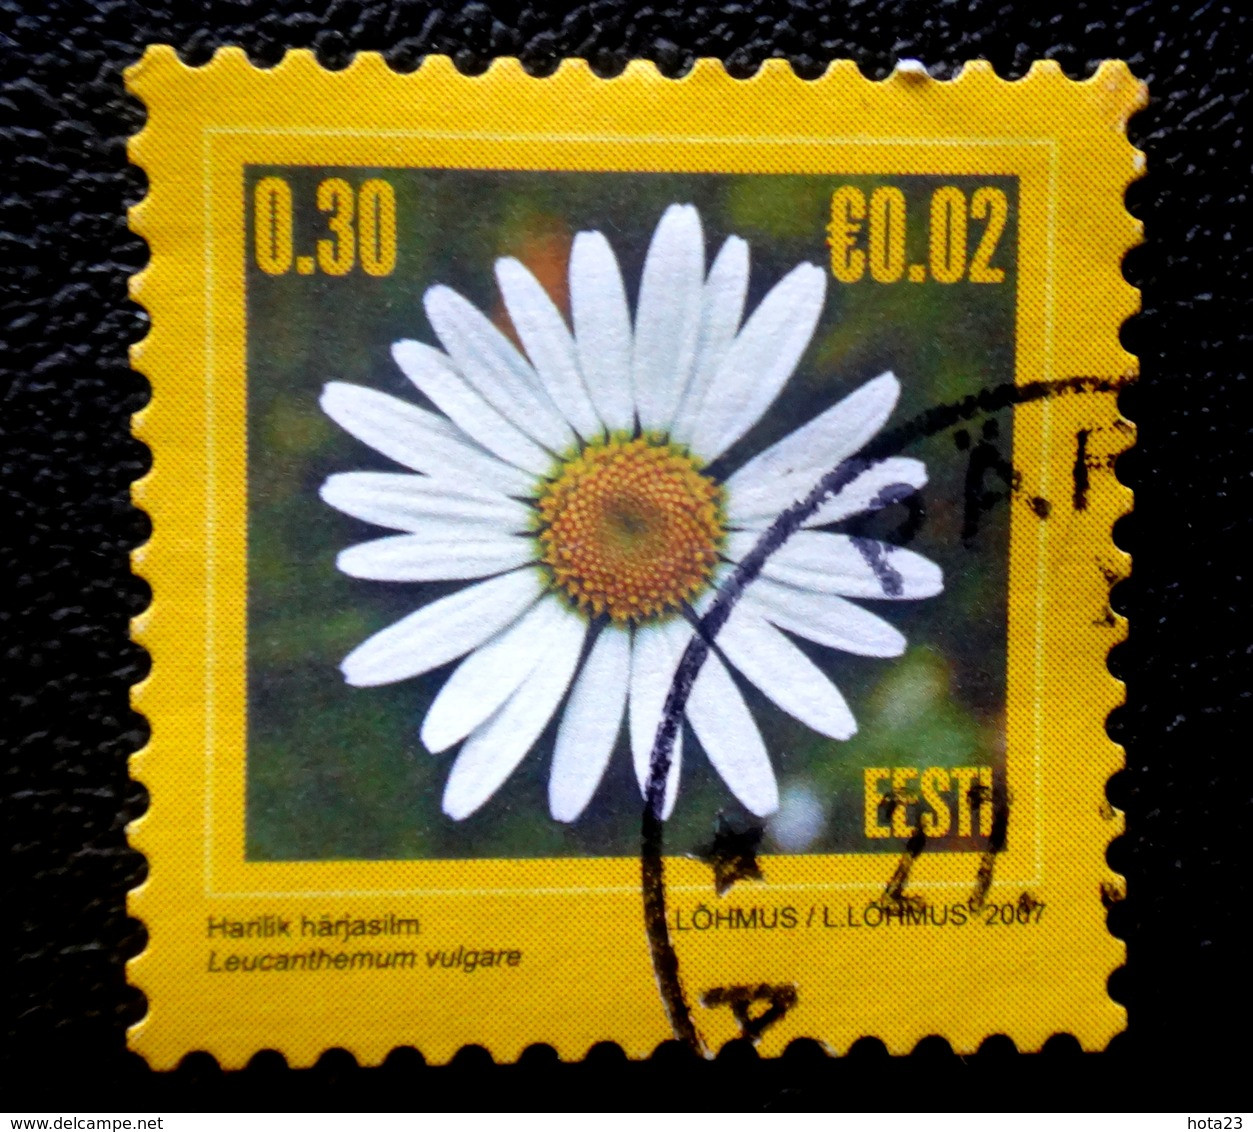 (!) Flowers Estland , Estonia Estonia 2007 Mi 574 L Used Stamps  (o)  ALB - 62 - 19 - 6 - Estland